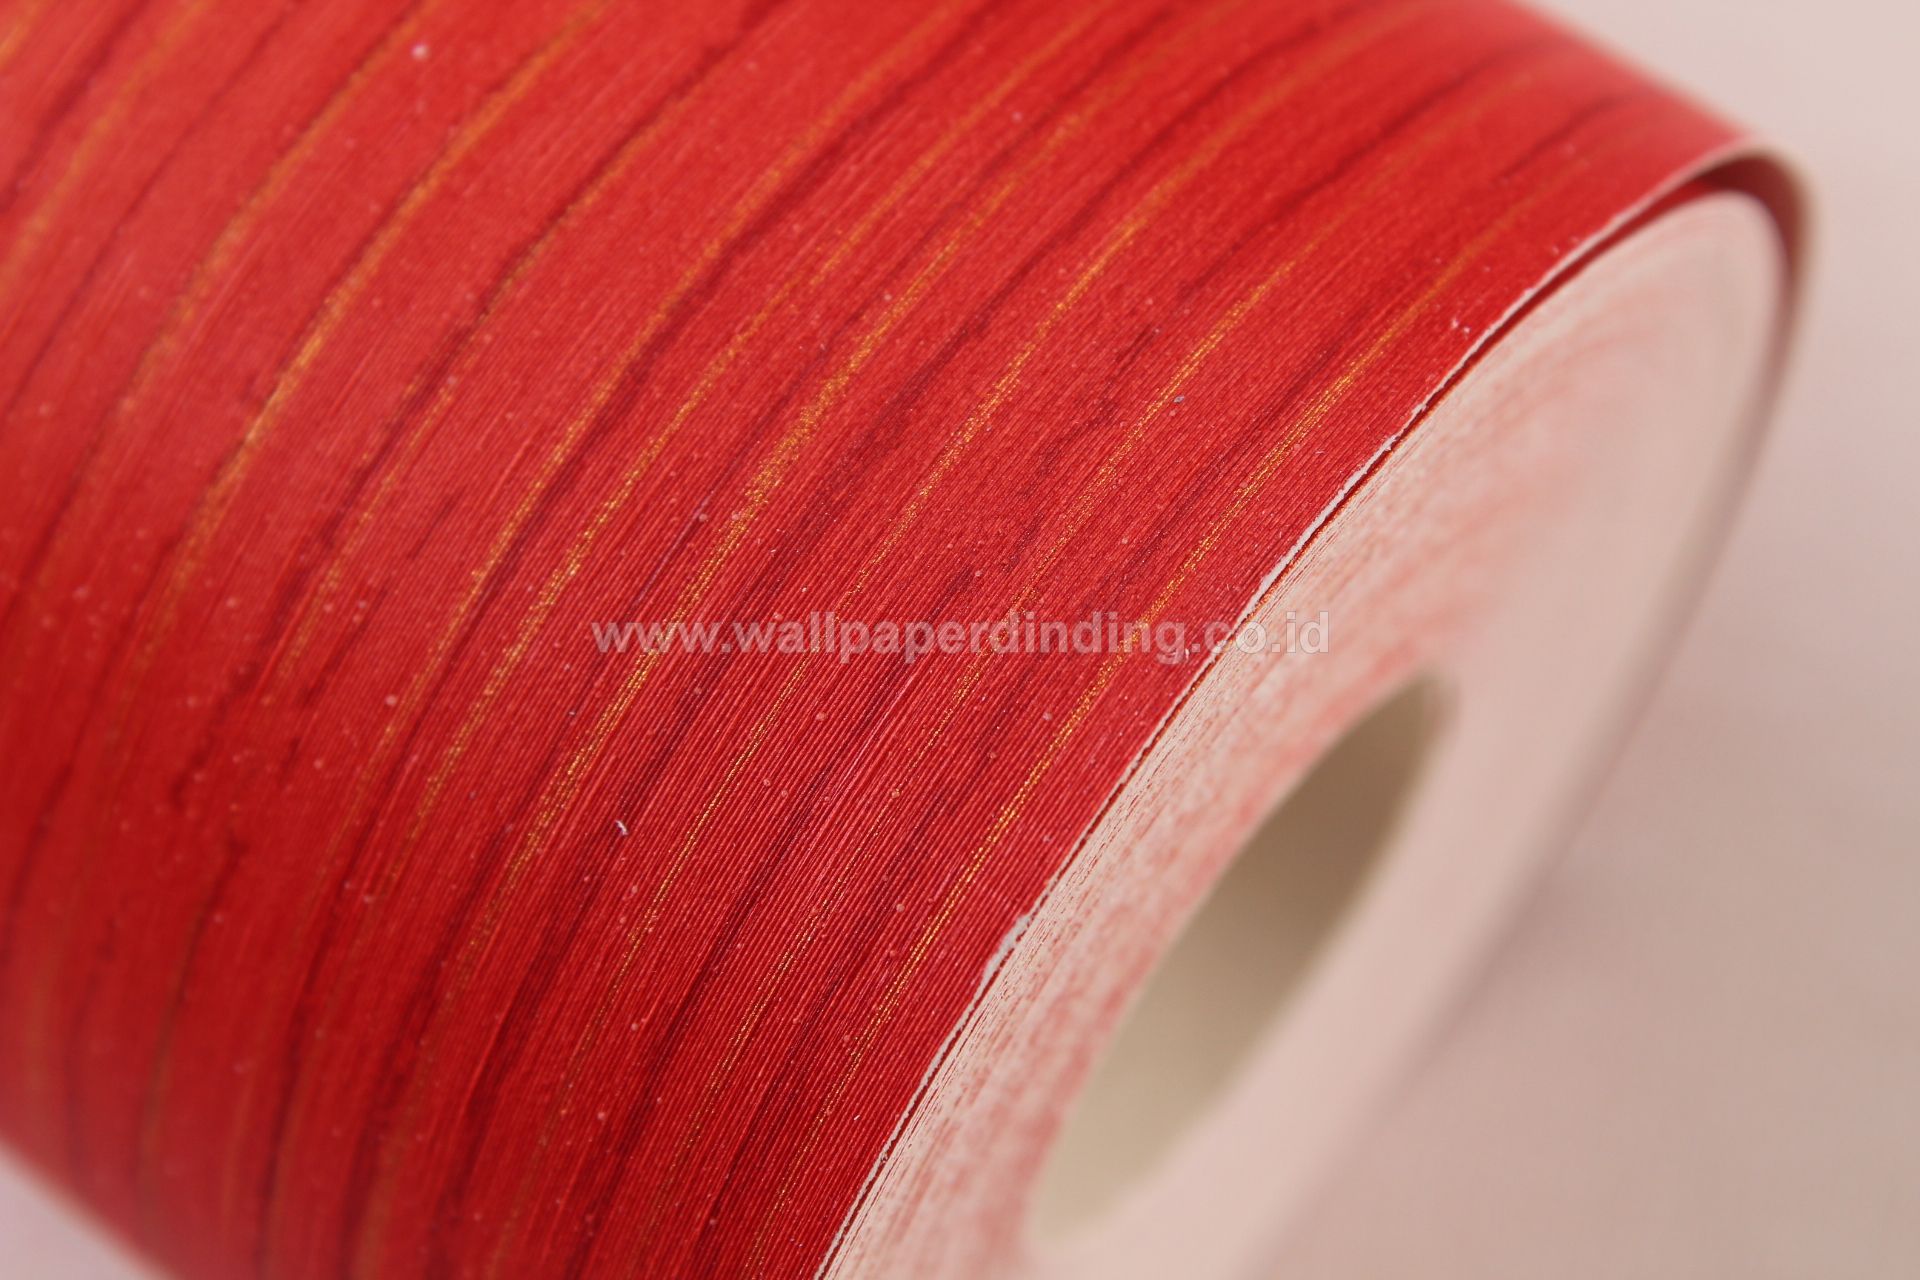 Wallpaper Dinding Garis Merah Kq2883 - Wire - HD Wallpaper 